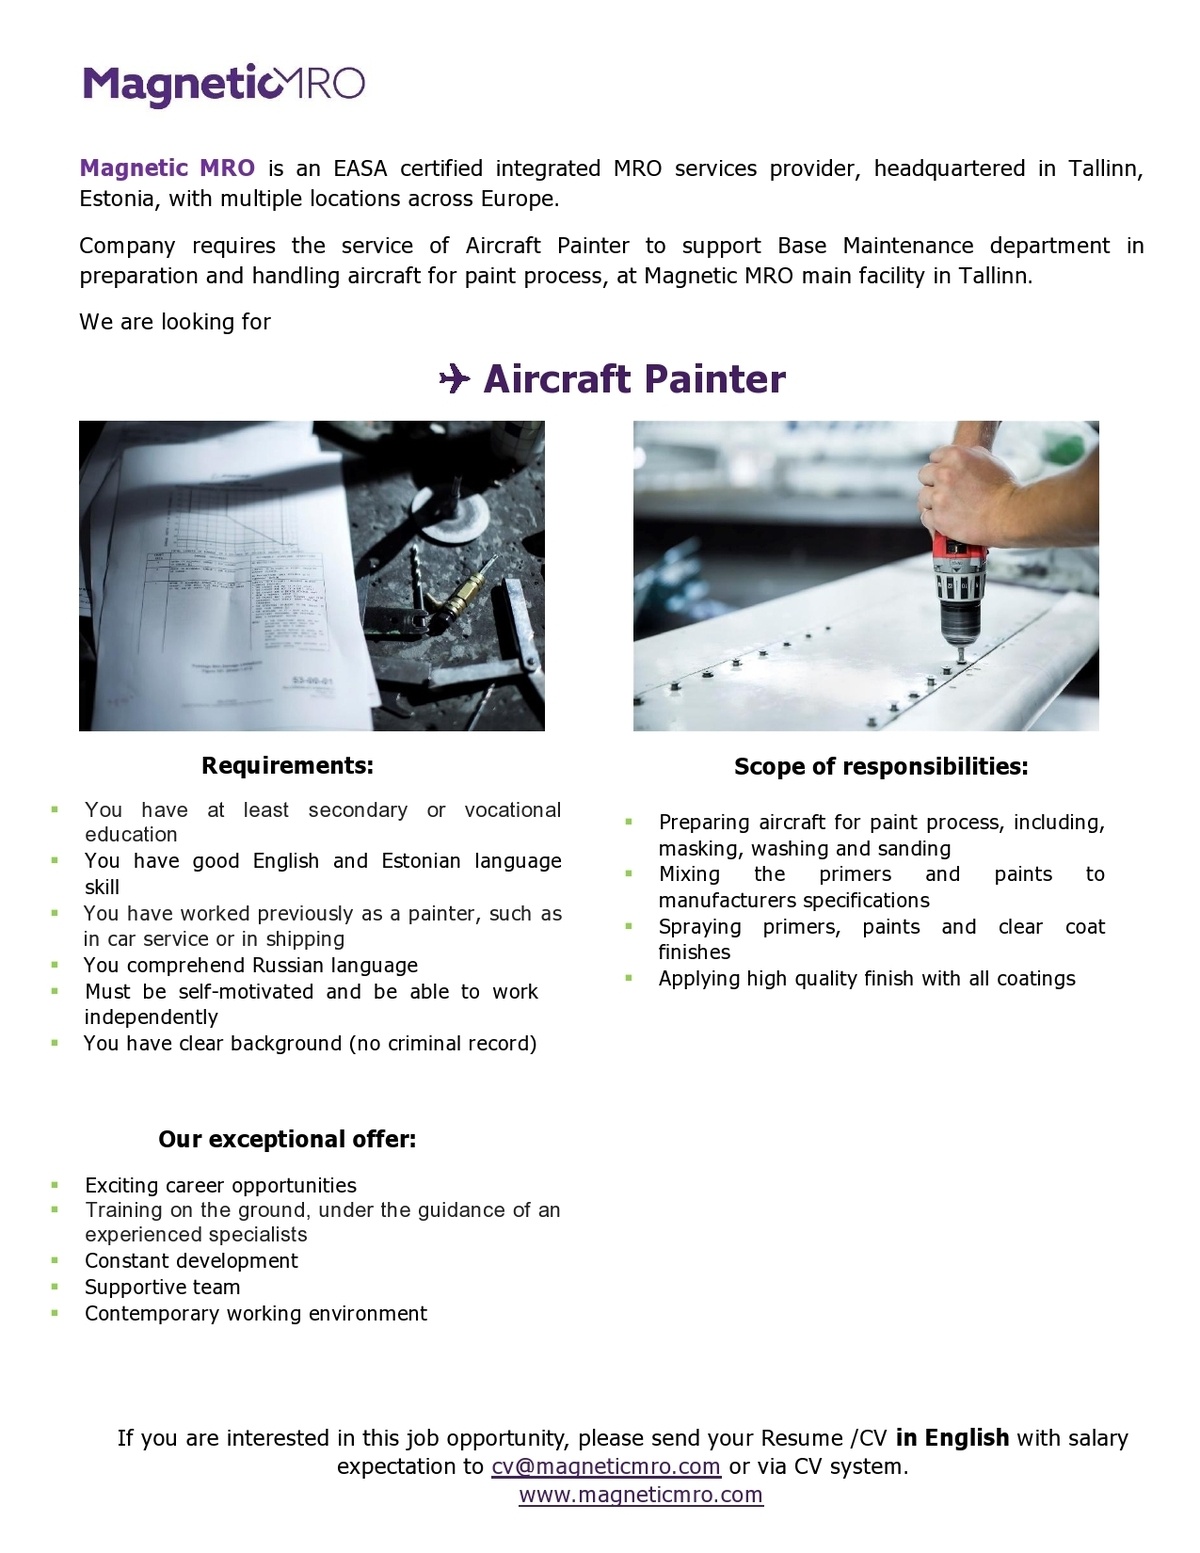 Magnetic MRO AS Aircraft Painter / Lennuki värvija